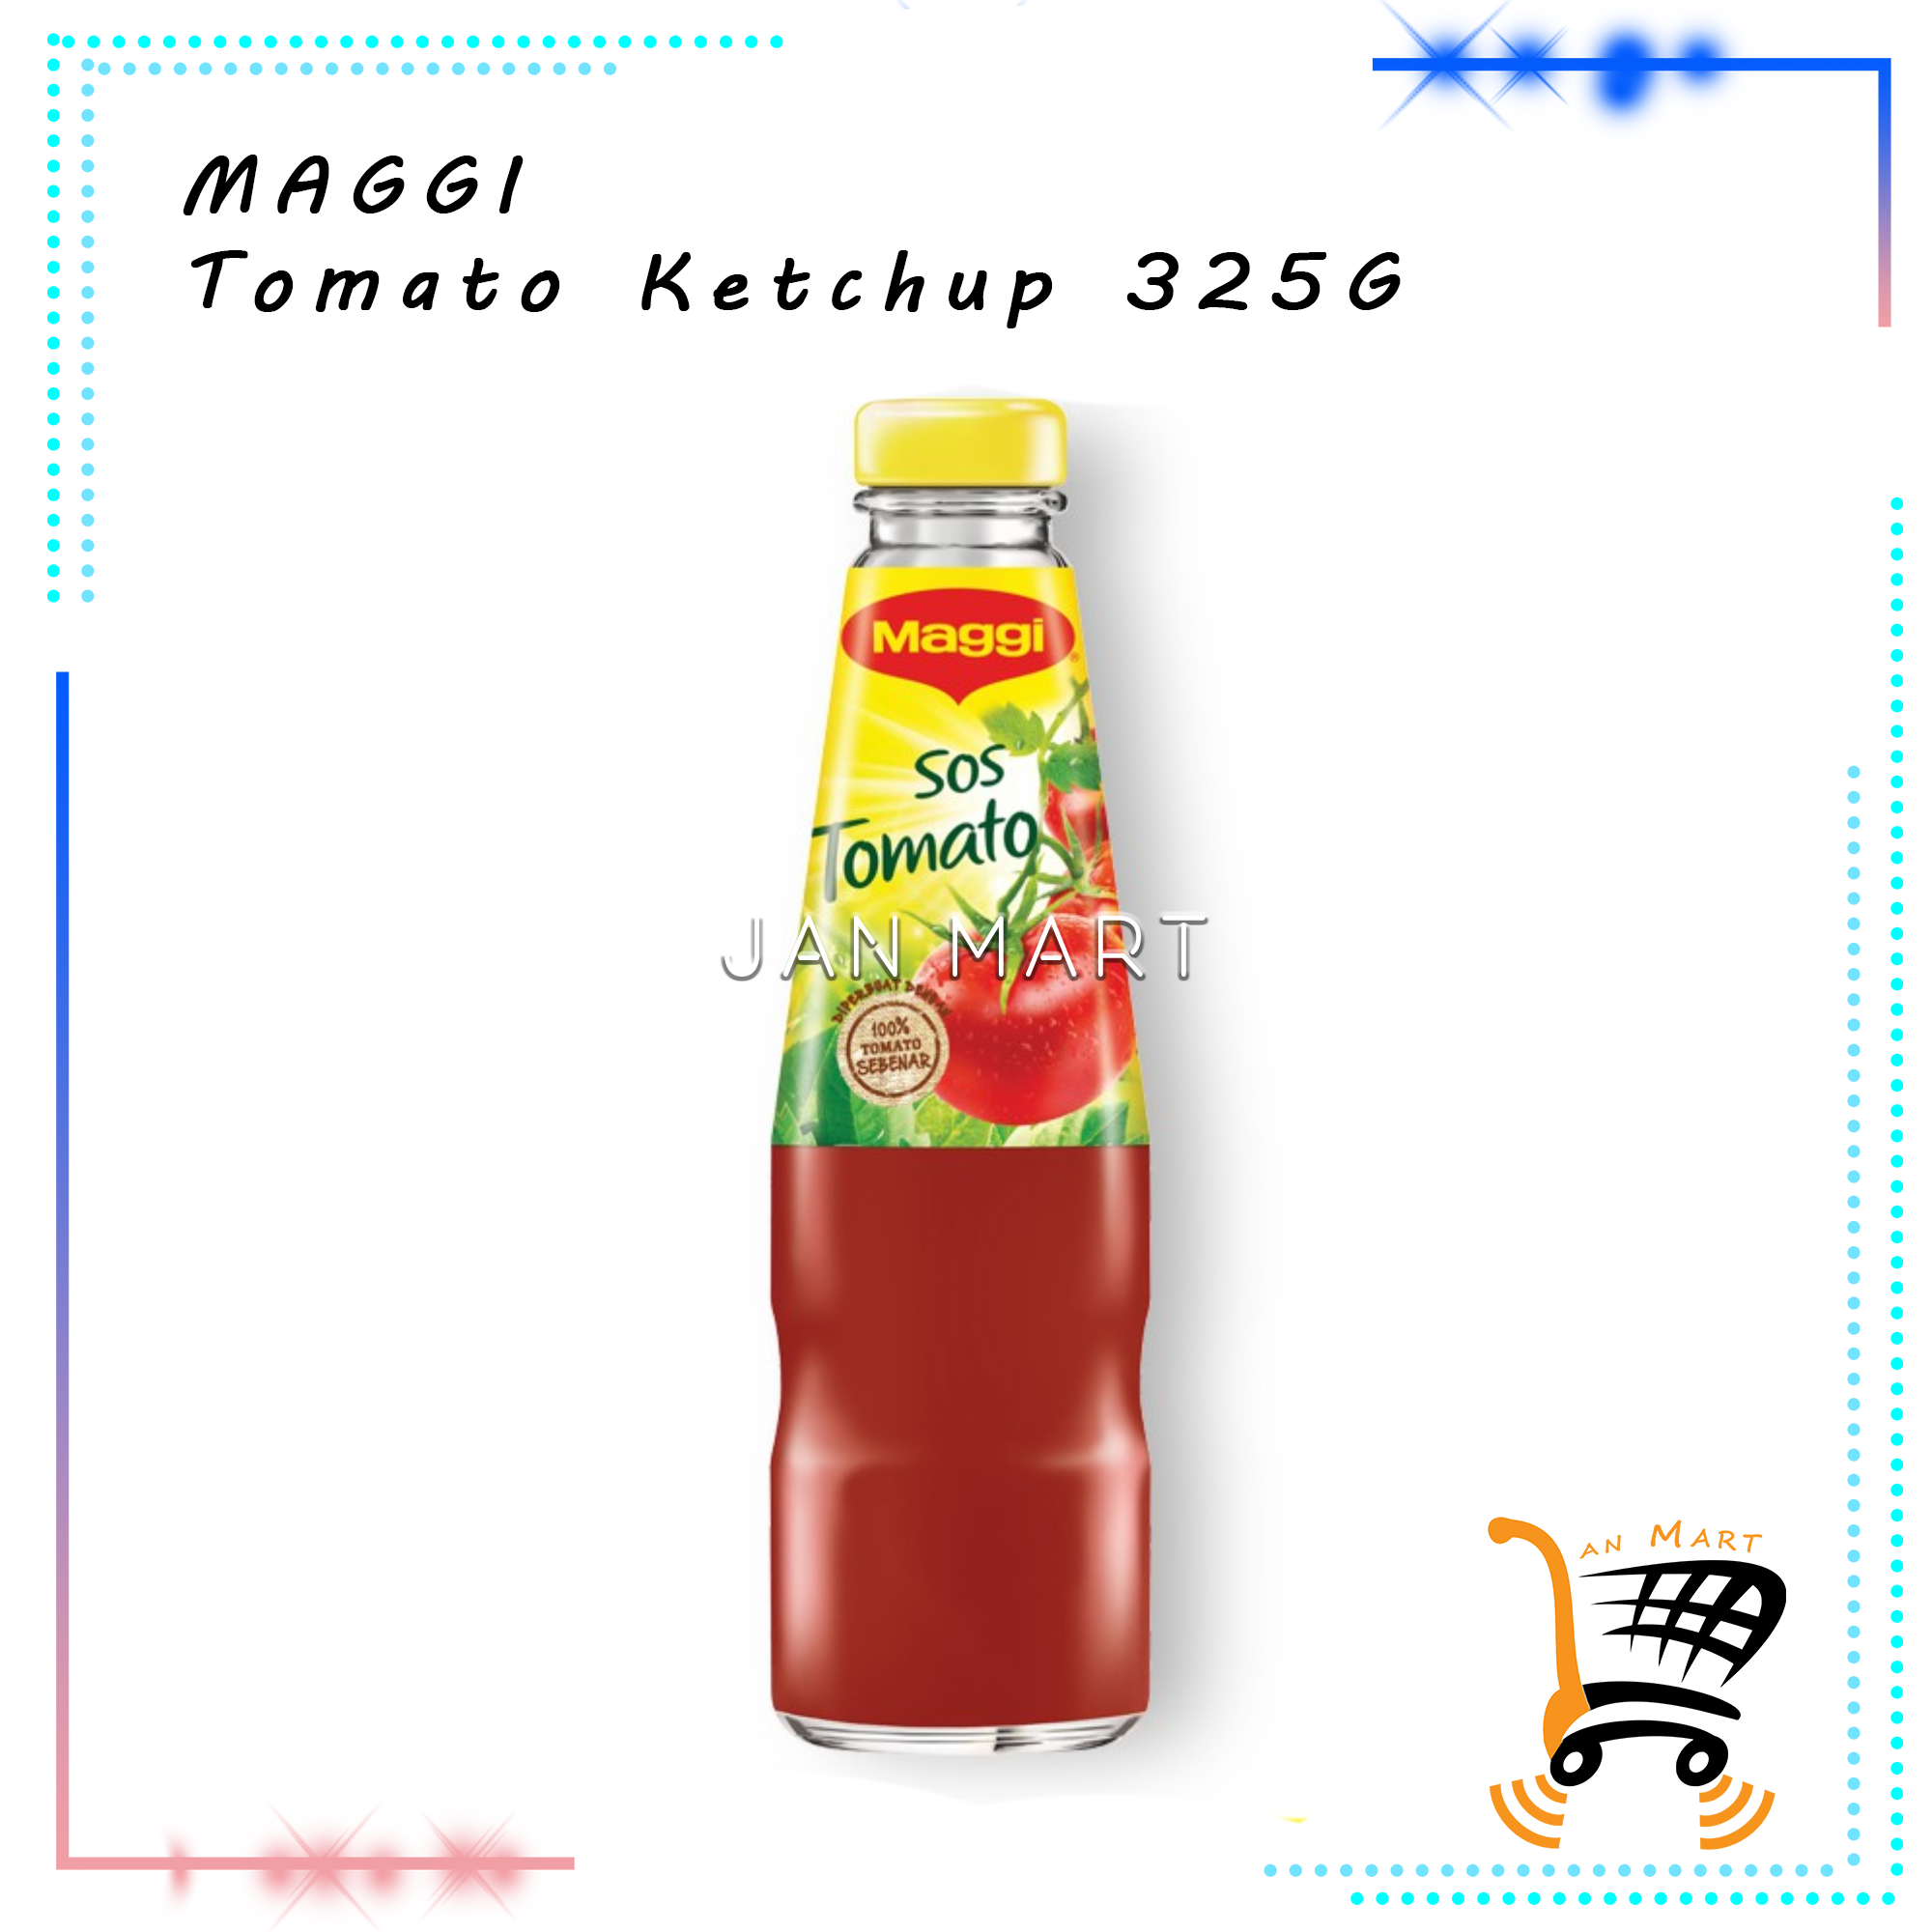 MAGGI Tomato Ketchup 325G